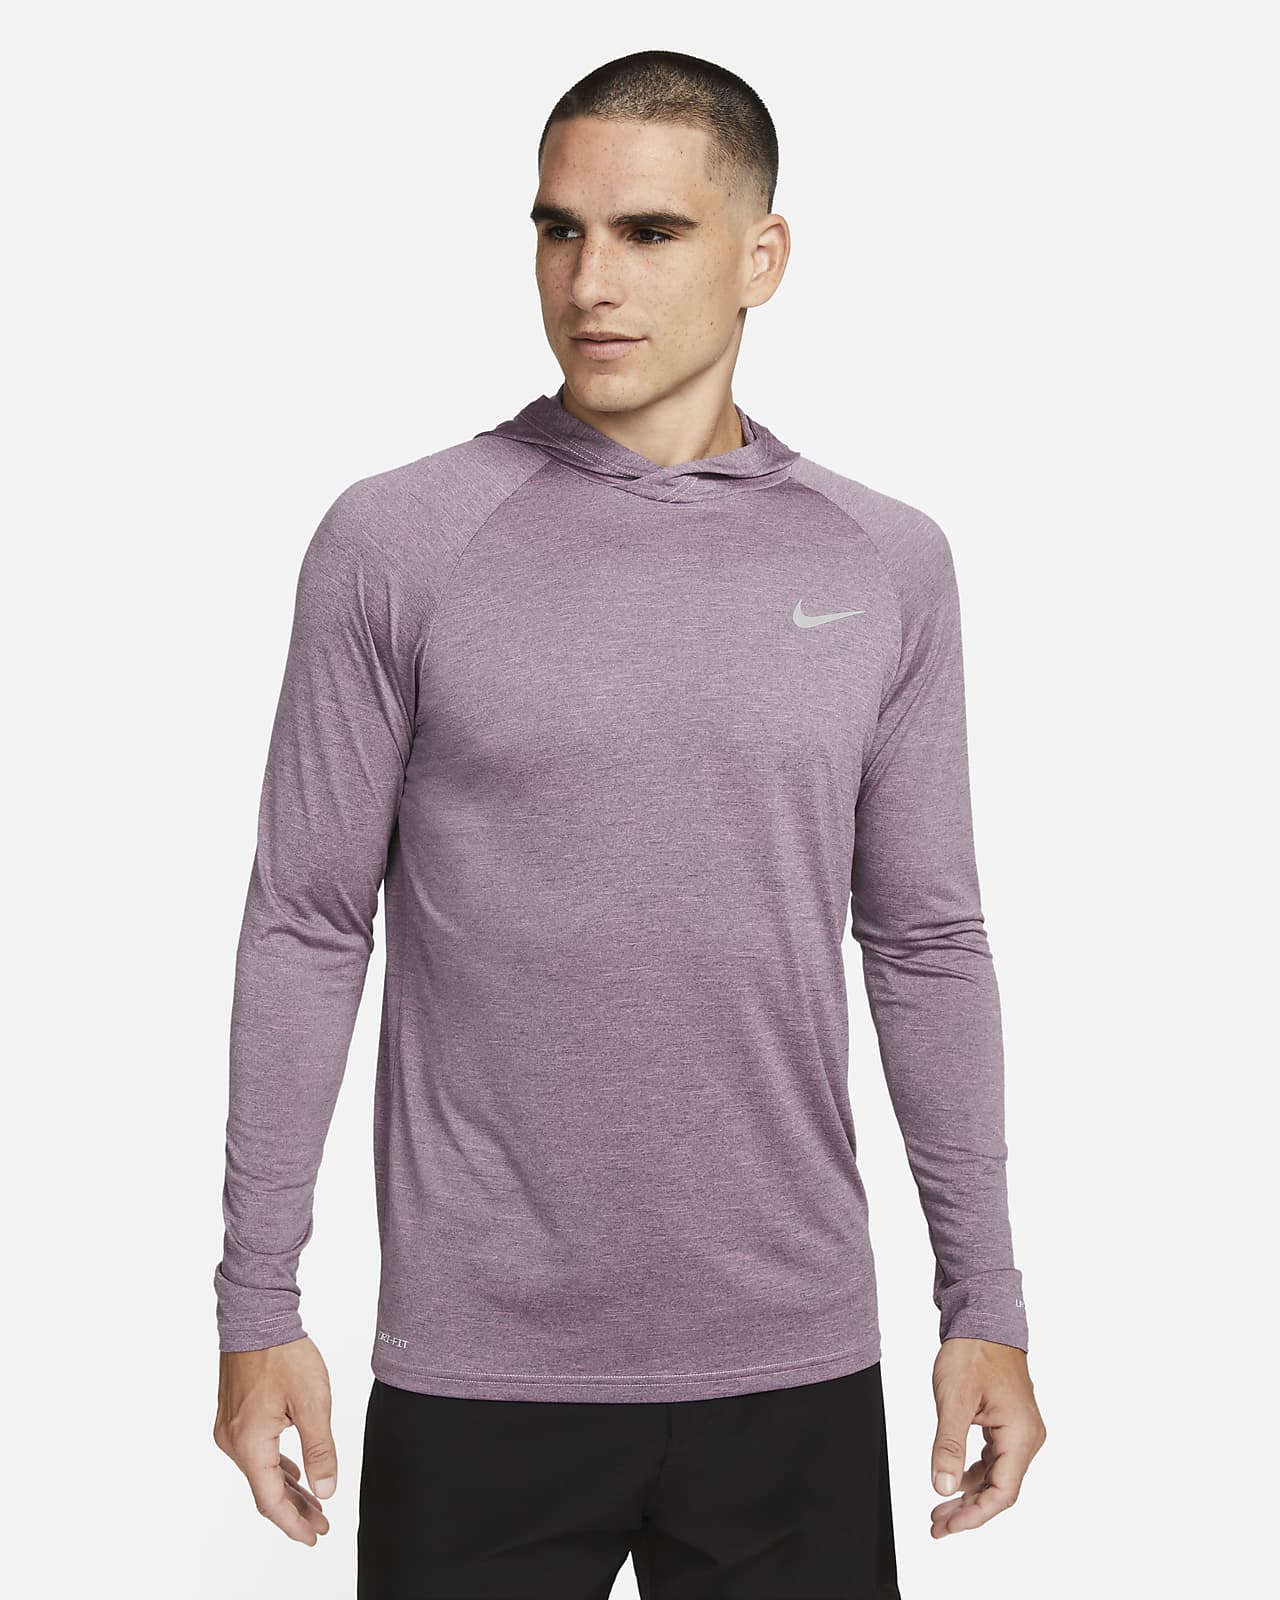 Nike Men's Long-Sleeve Hooded Shirt.